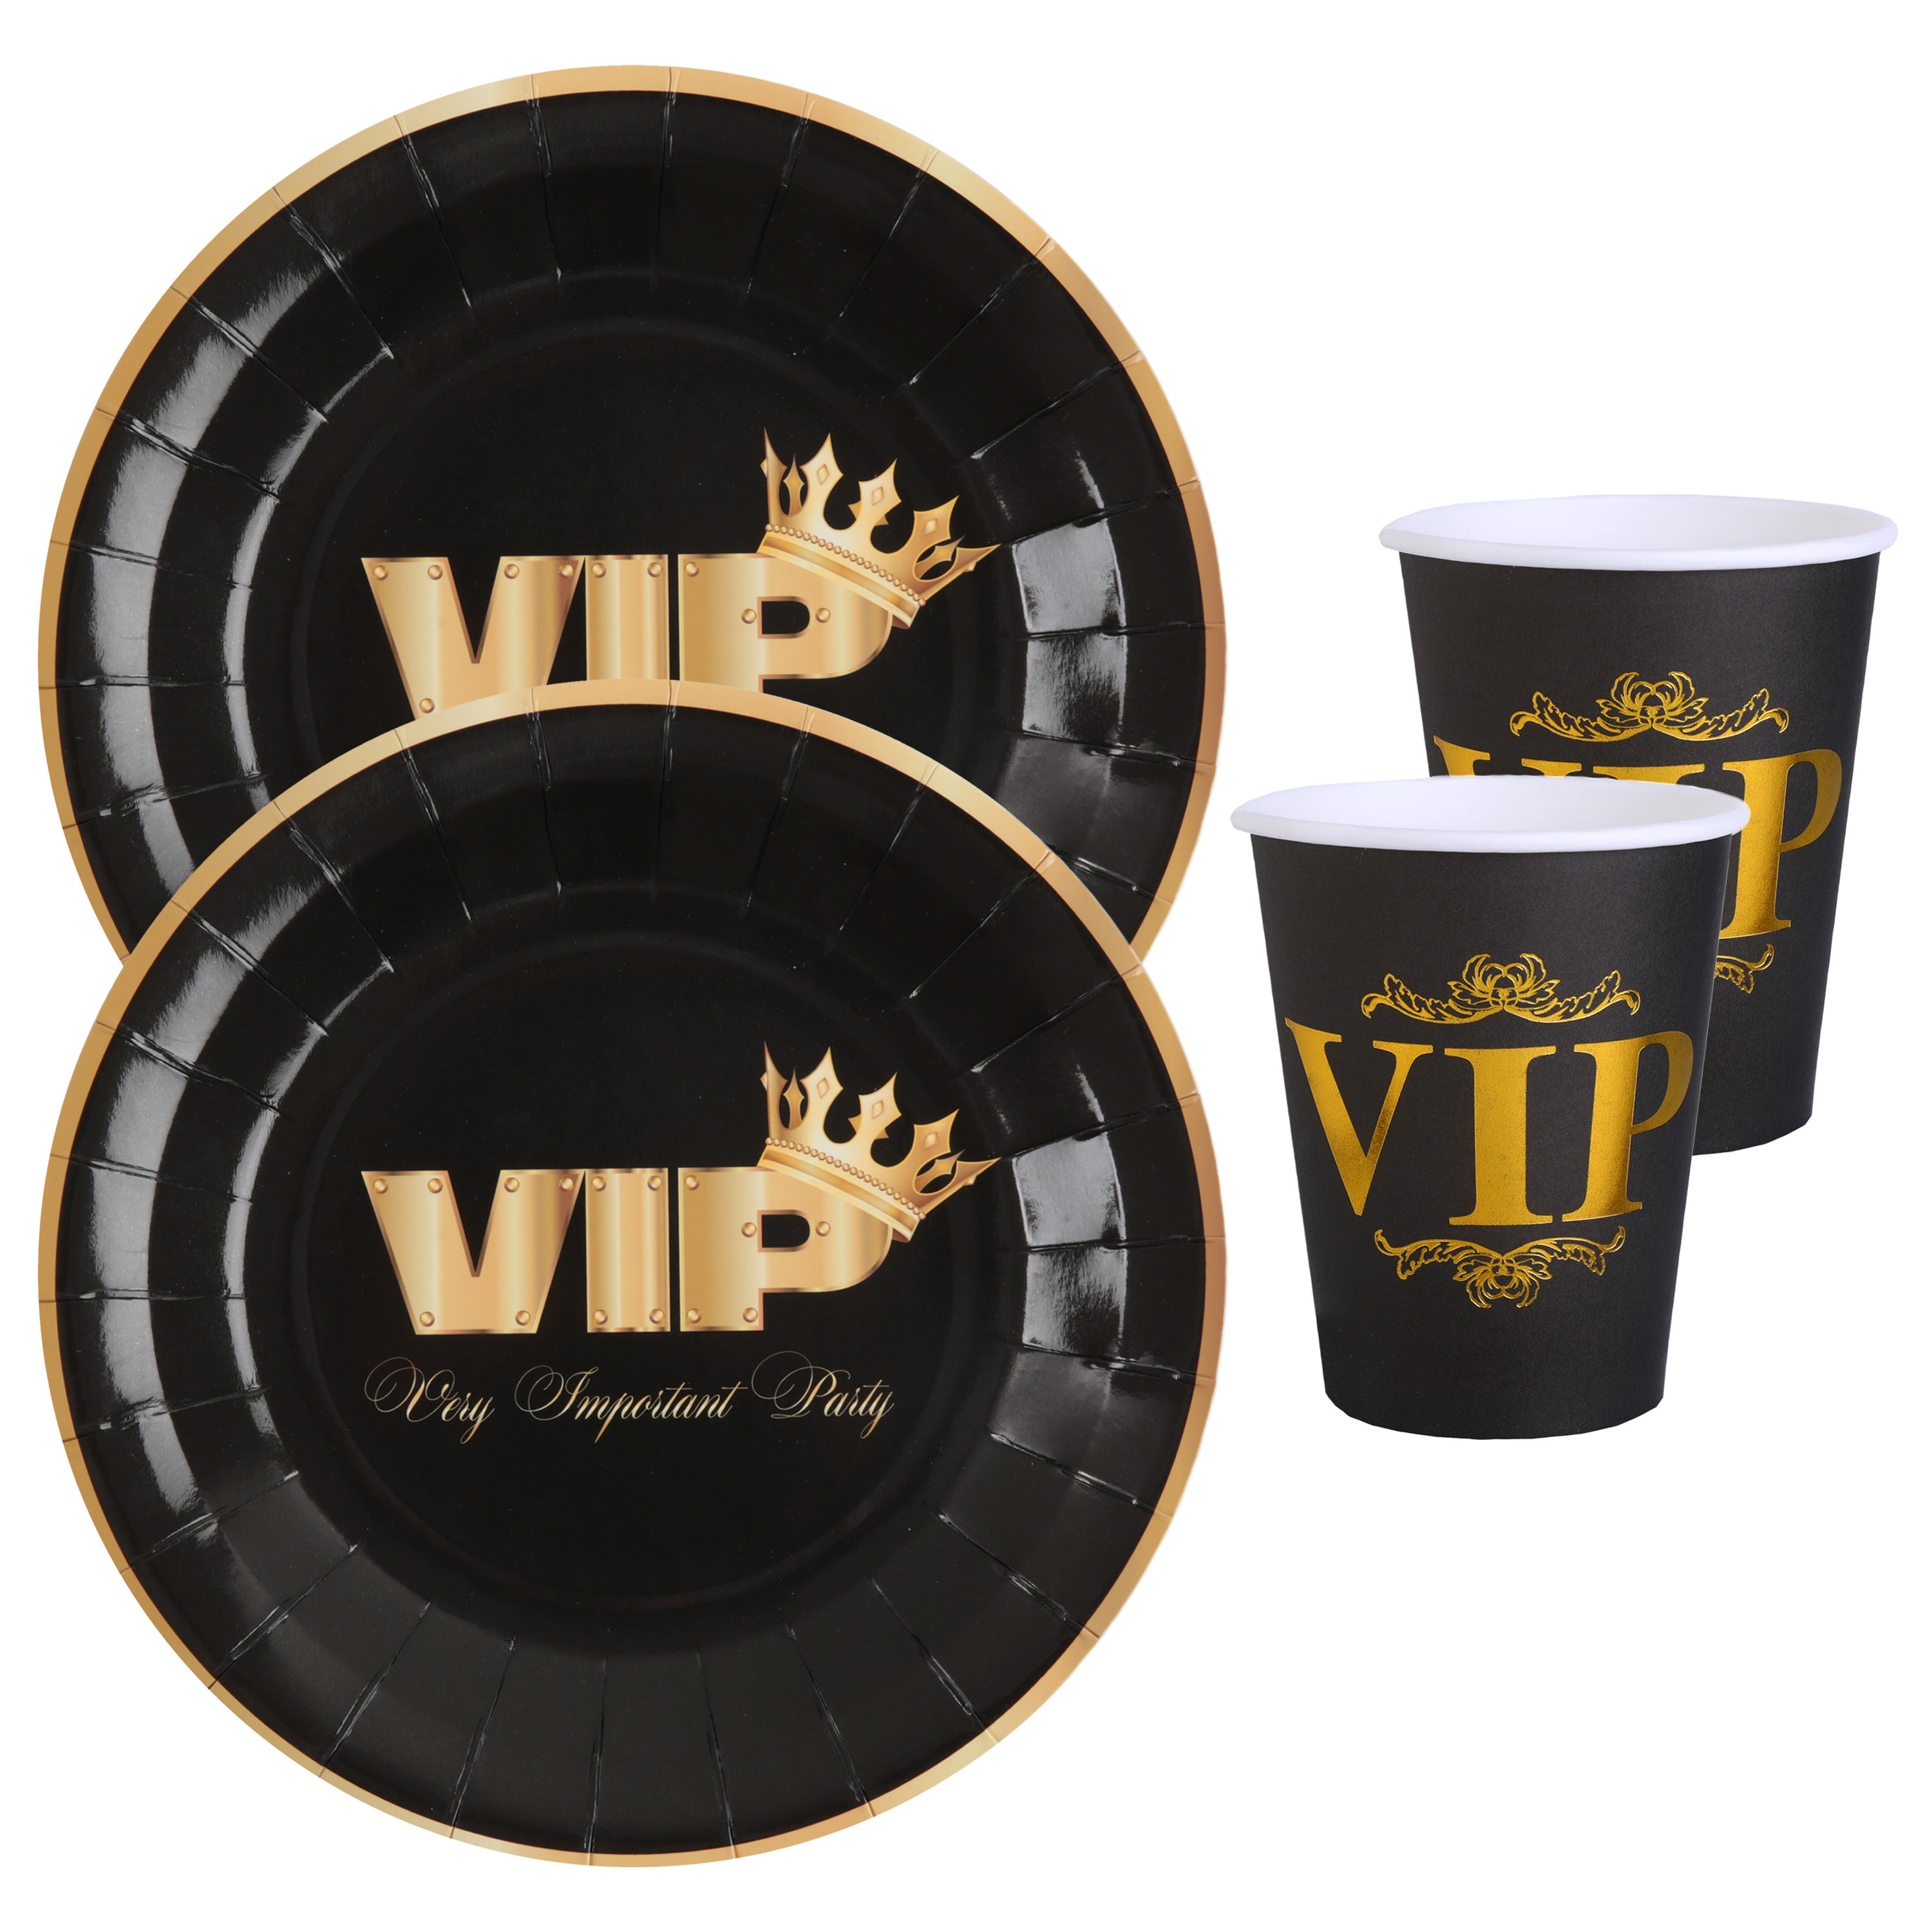 VIP feest wegwerp servies set 20x bordjes-20x bekers zwart-goud